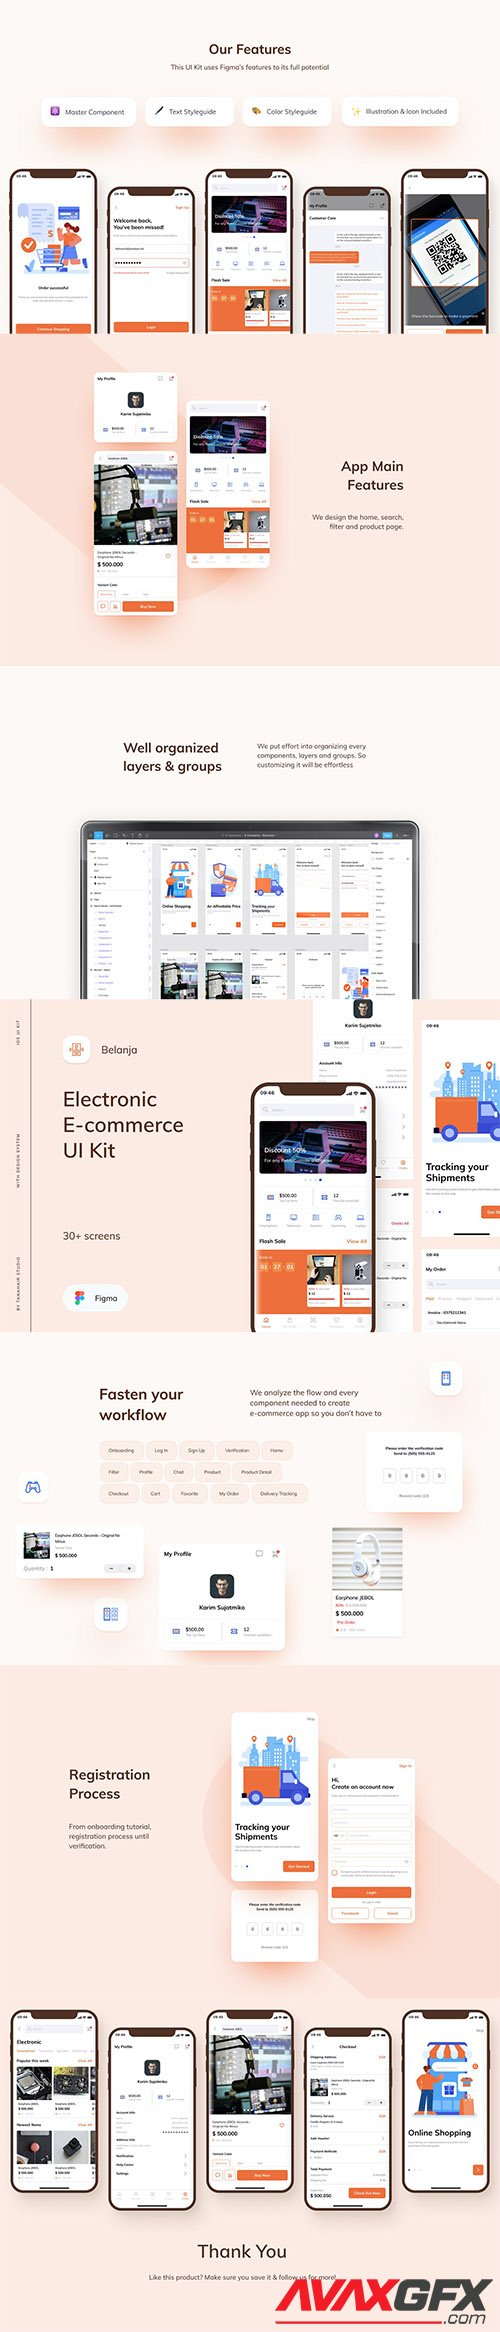 Belanja - Electronic E-commerce UI Kit